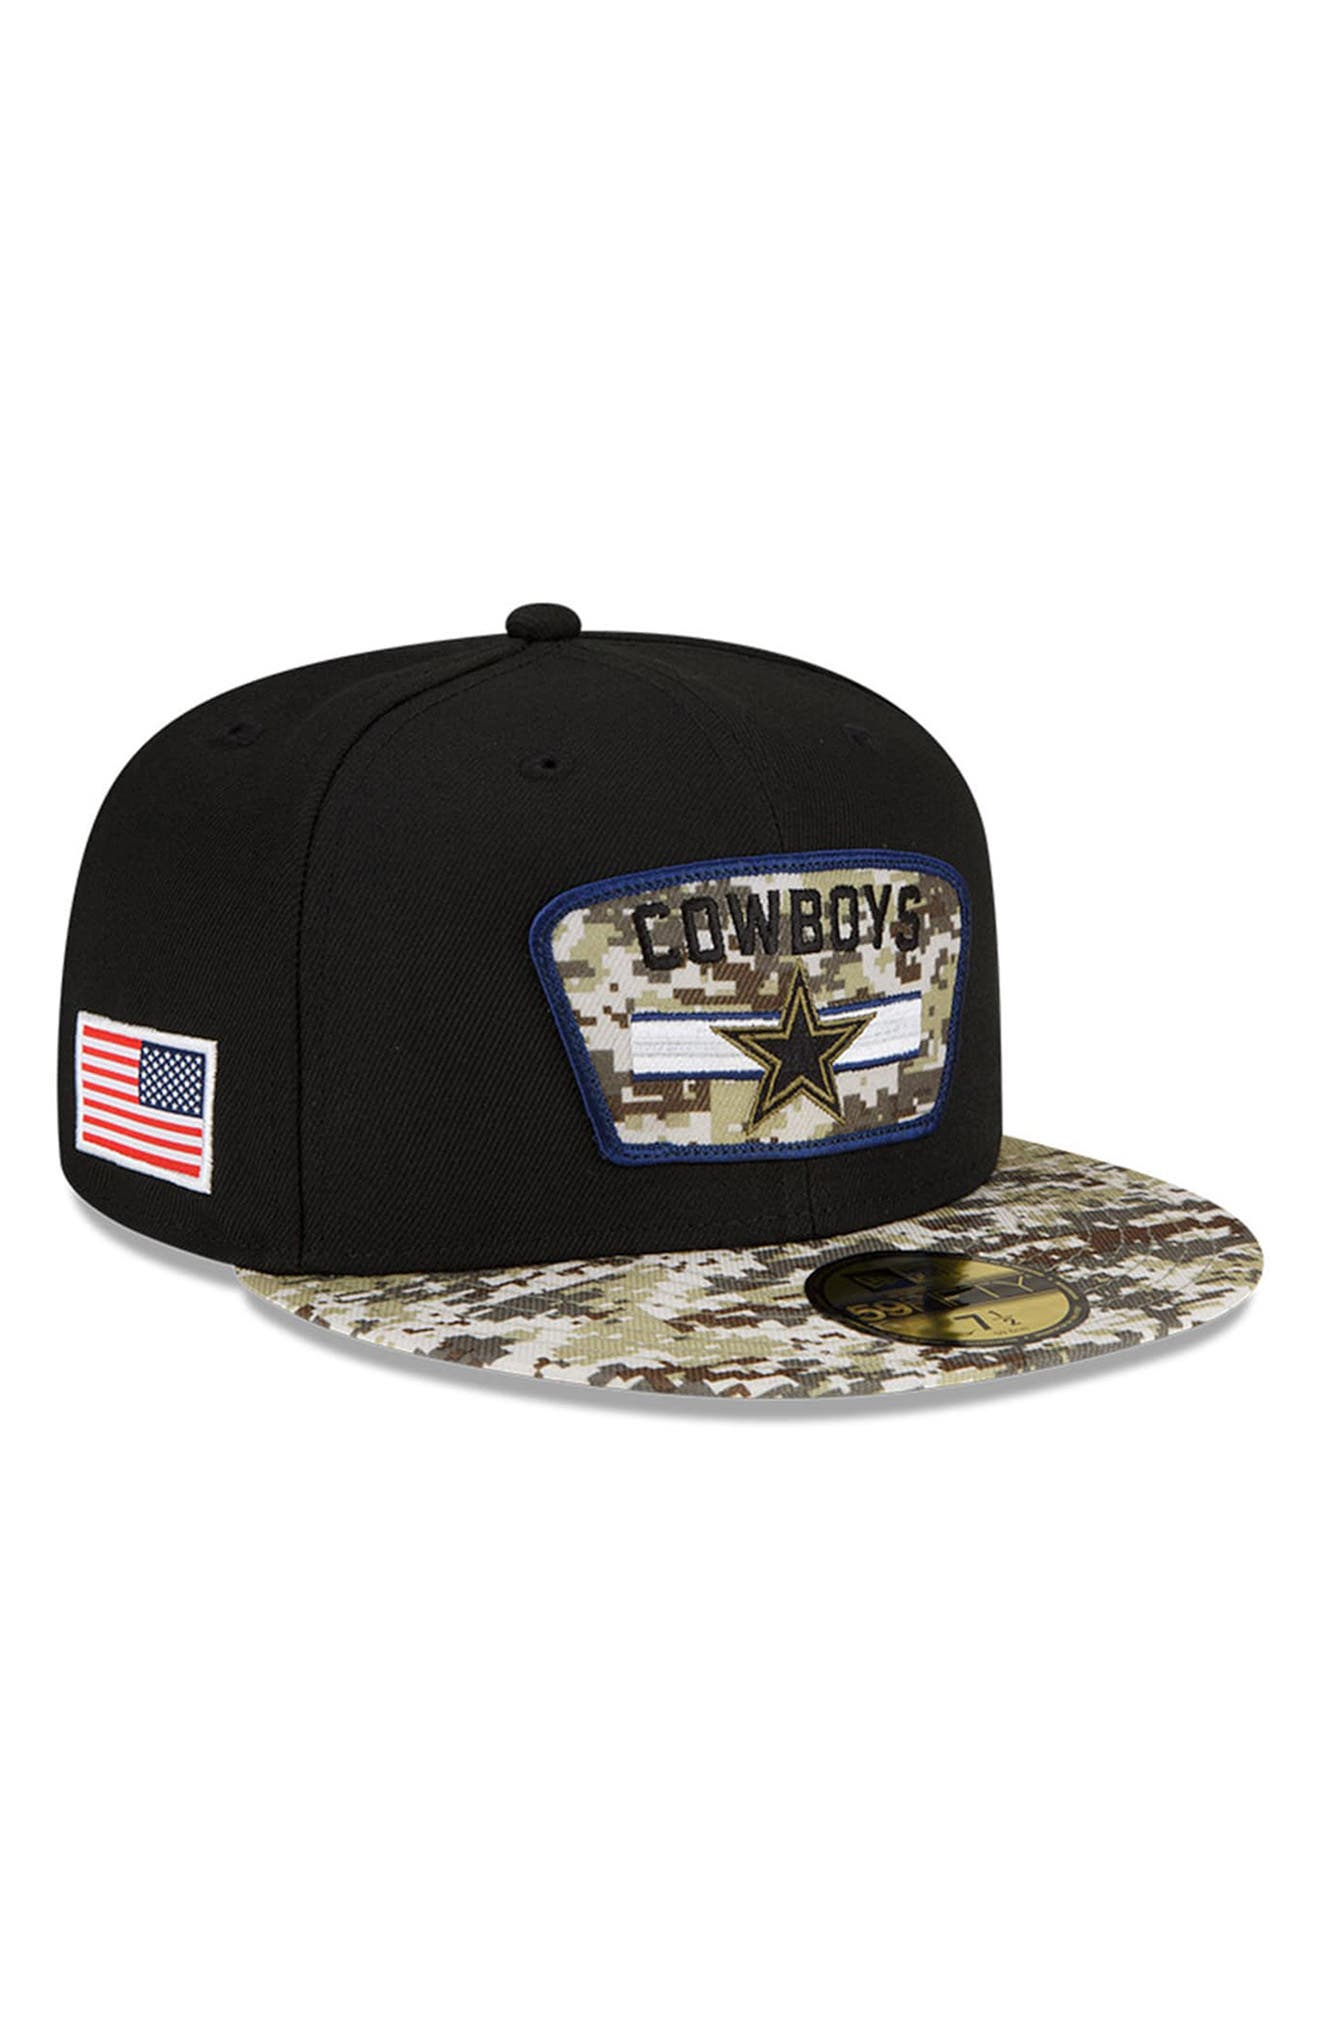 MOO Unisex Custom Cowboy Outdoor Sports Hat Adjustable Baseball Cap